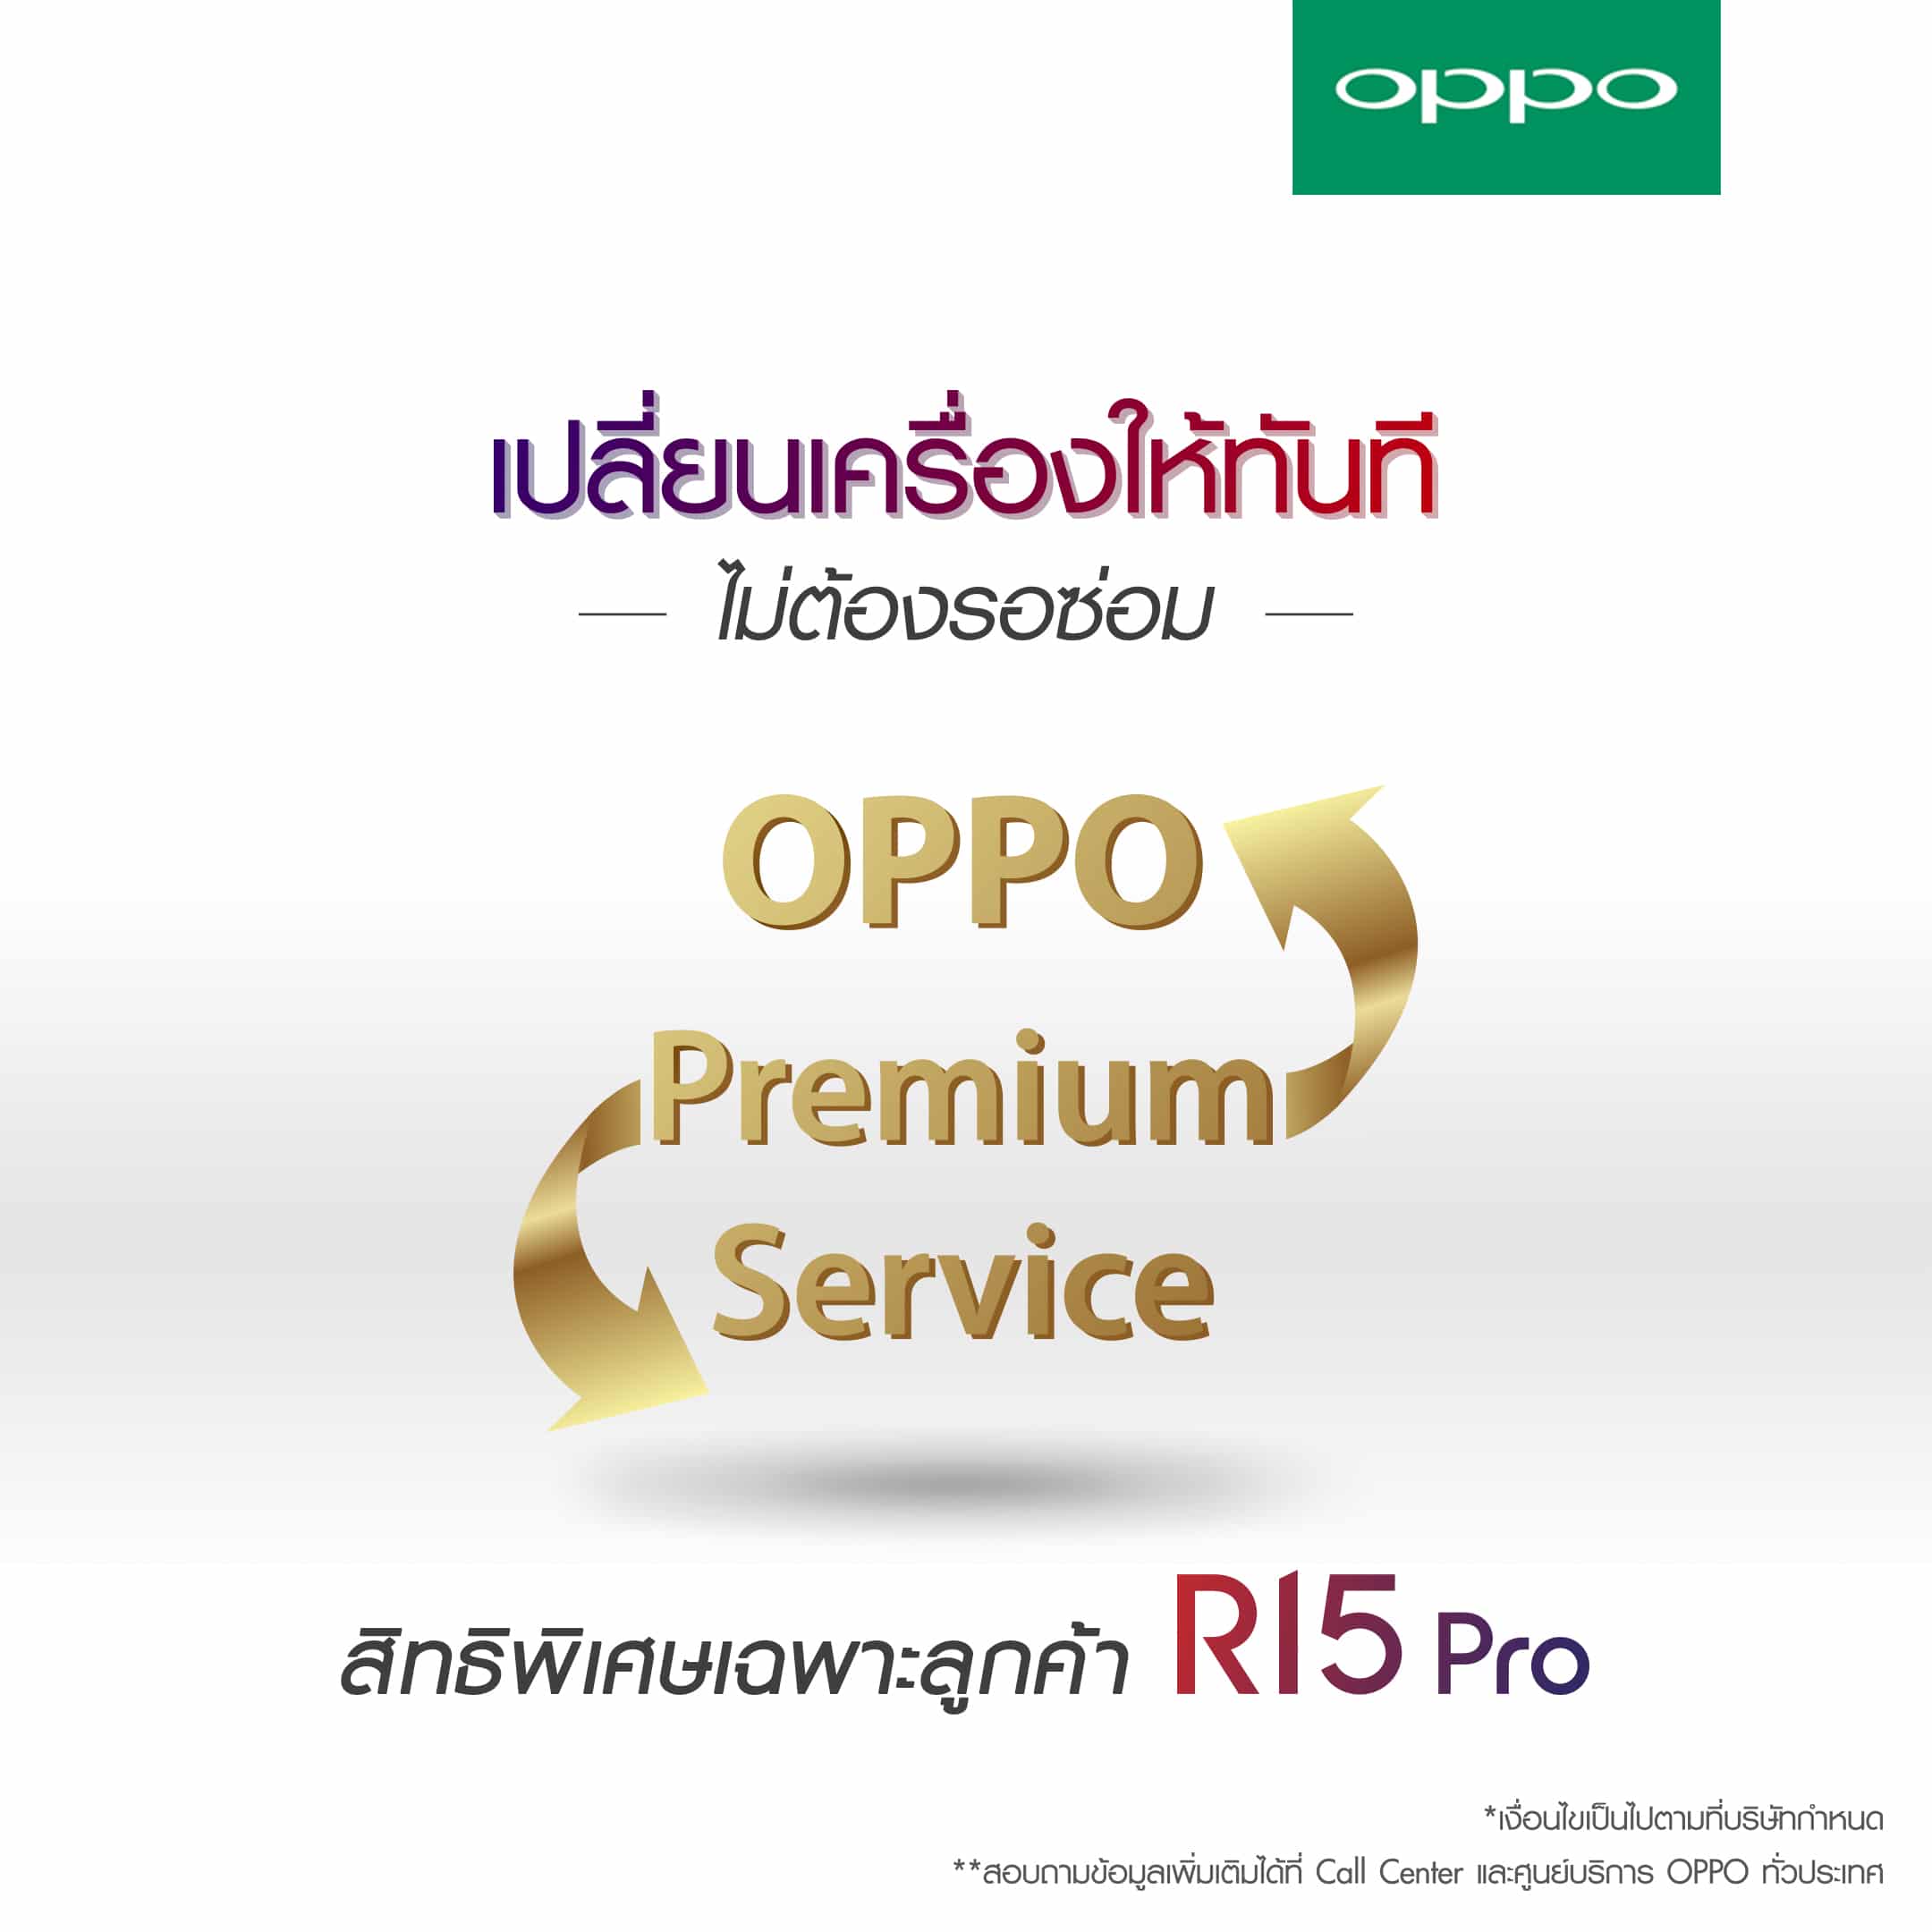 OPPO R15 Pro - OPPO Premium Service - ภาพที่ 3